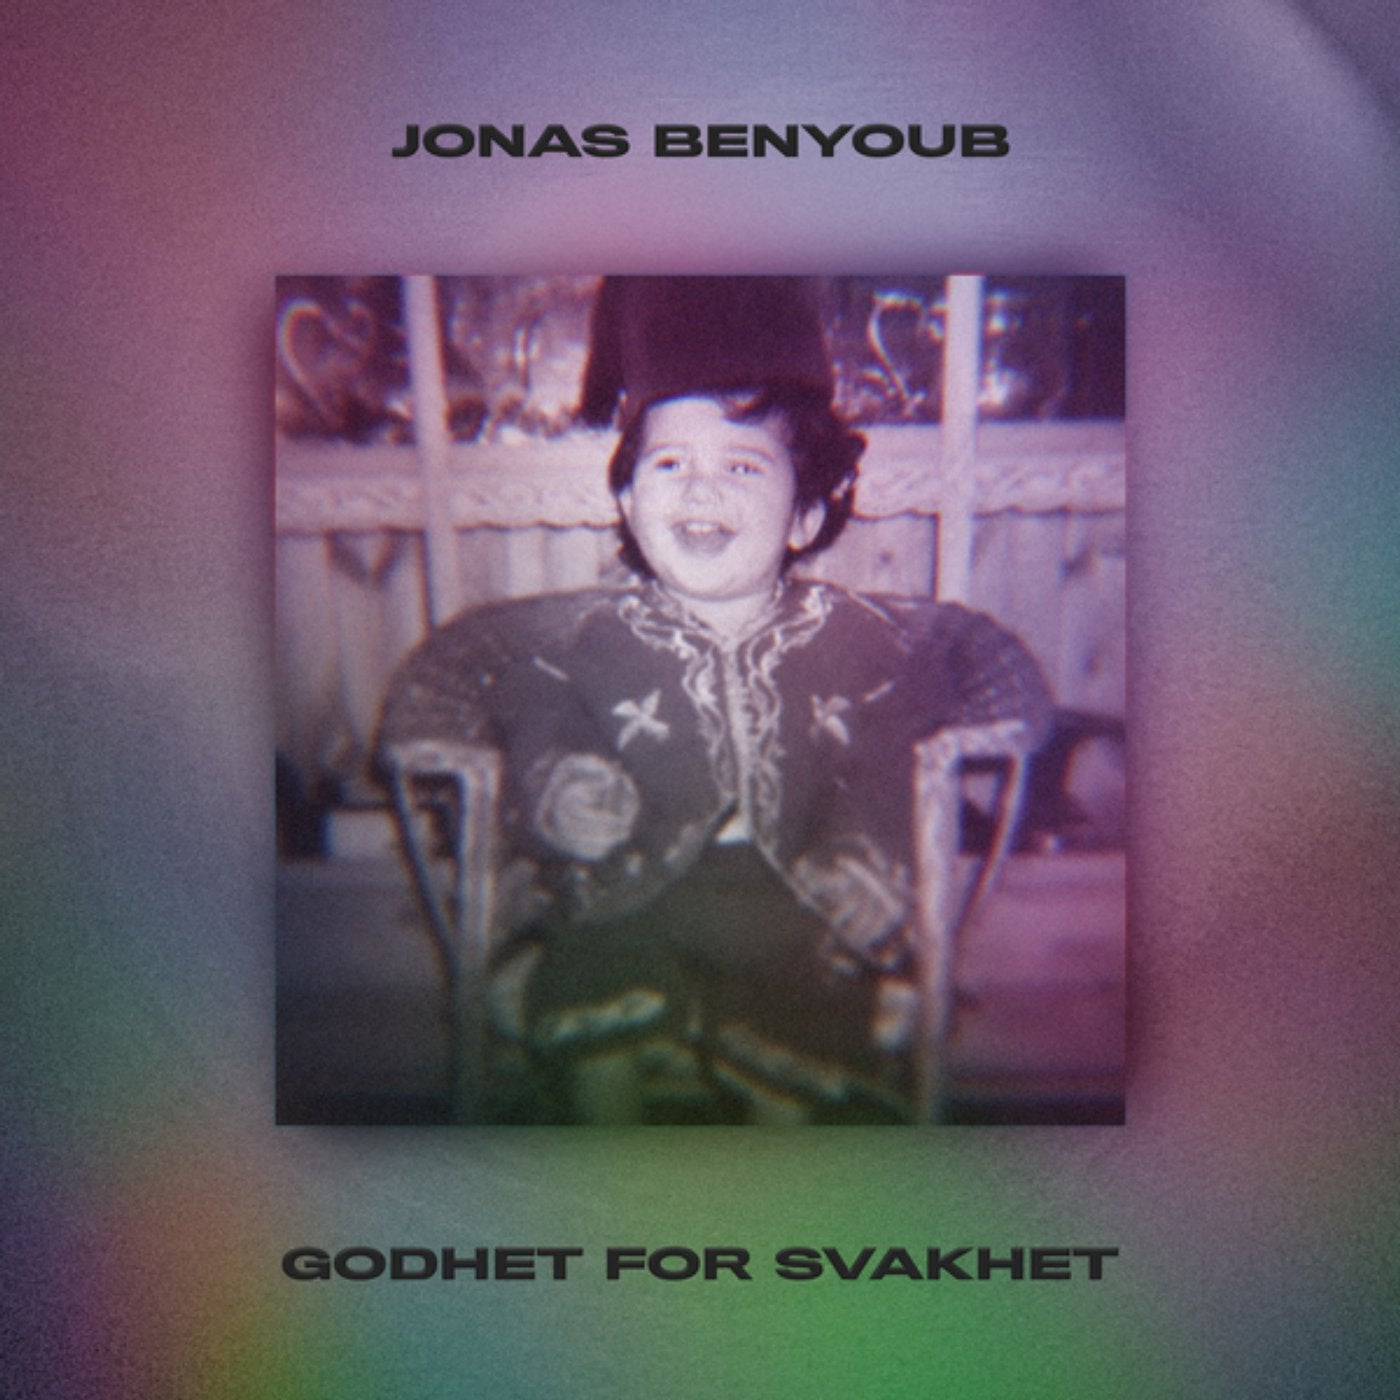 Jonas Benyoub - Songs, Events and Music Stats